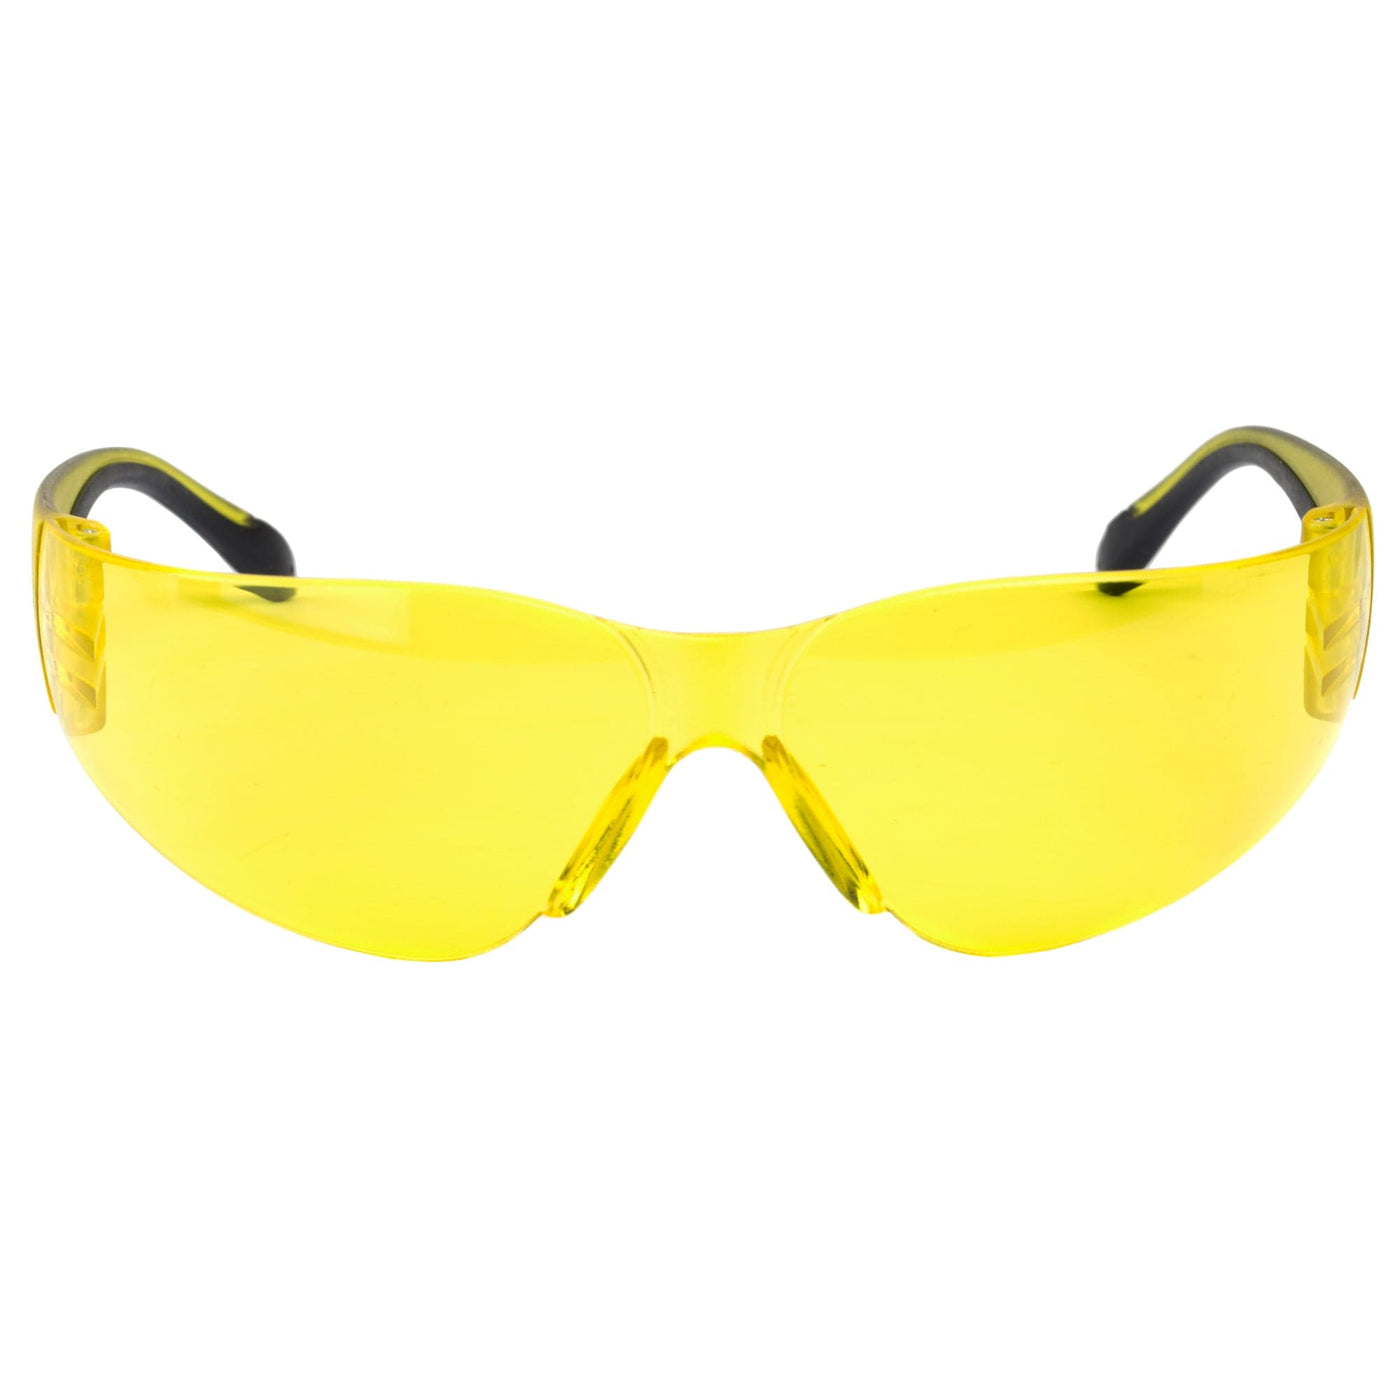 Walker's Walker's Youth/ Wmn Yel Lens Glasses Safety/Protection